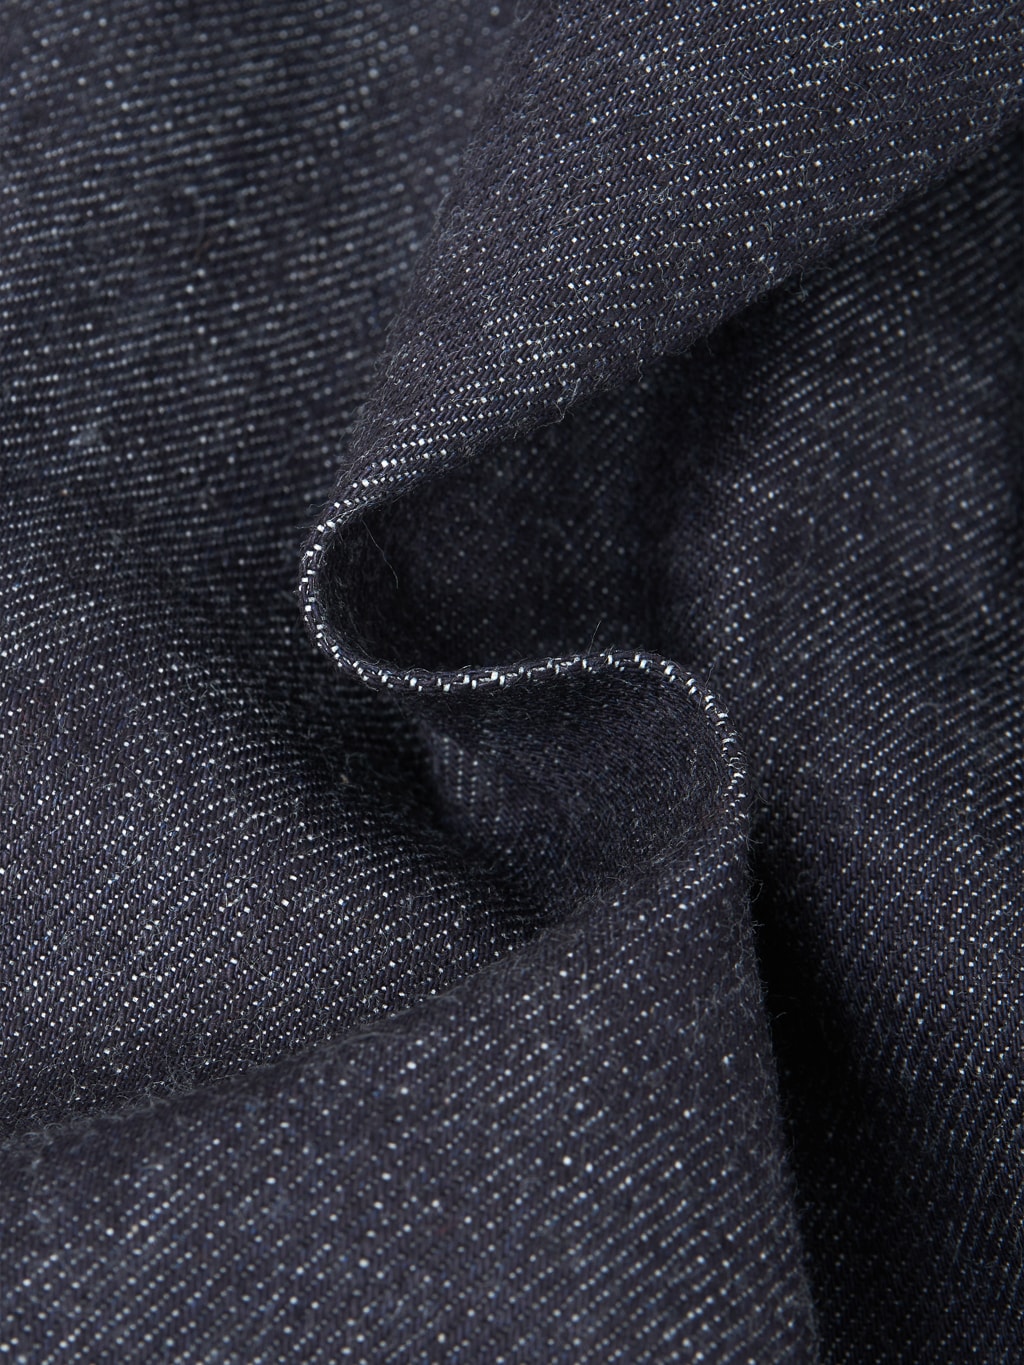 momotaro 0605 13 indigo jeans natural tapered 13oz texture